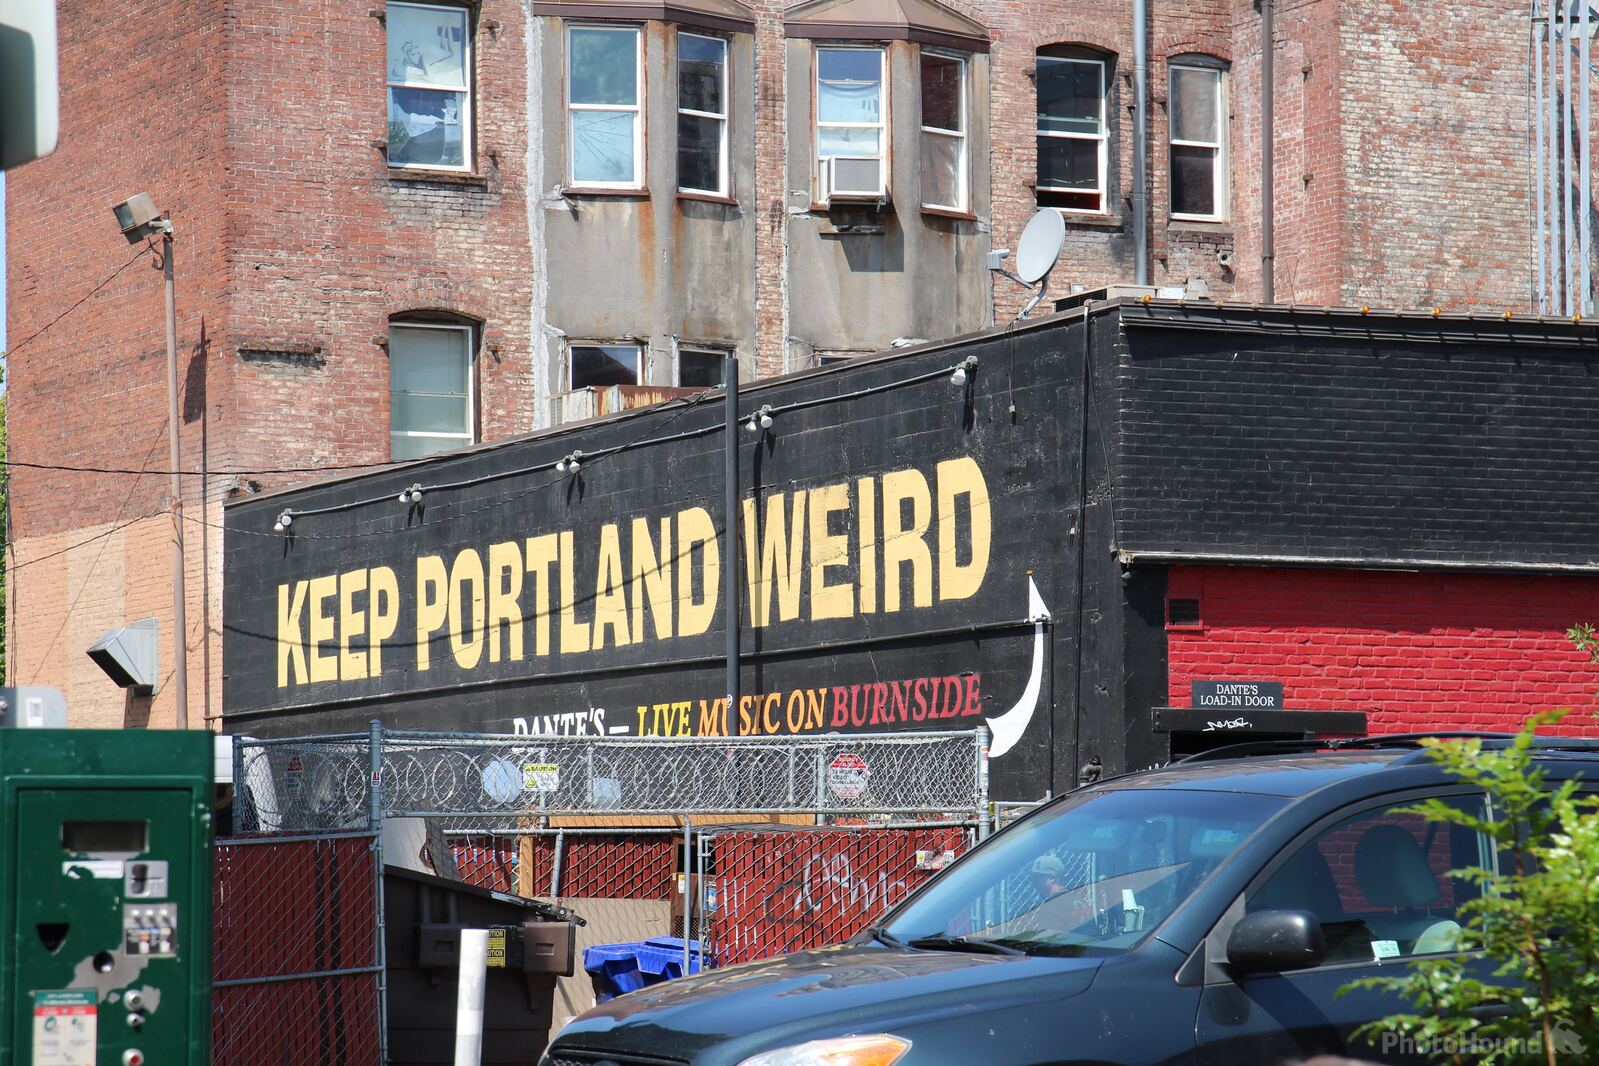 Image of Keep Portland Weird by Team PhotoHound